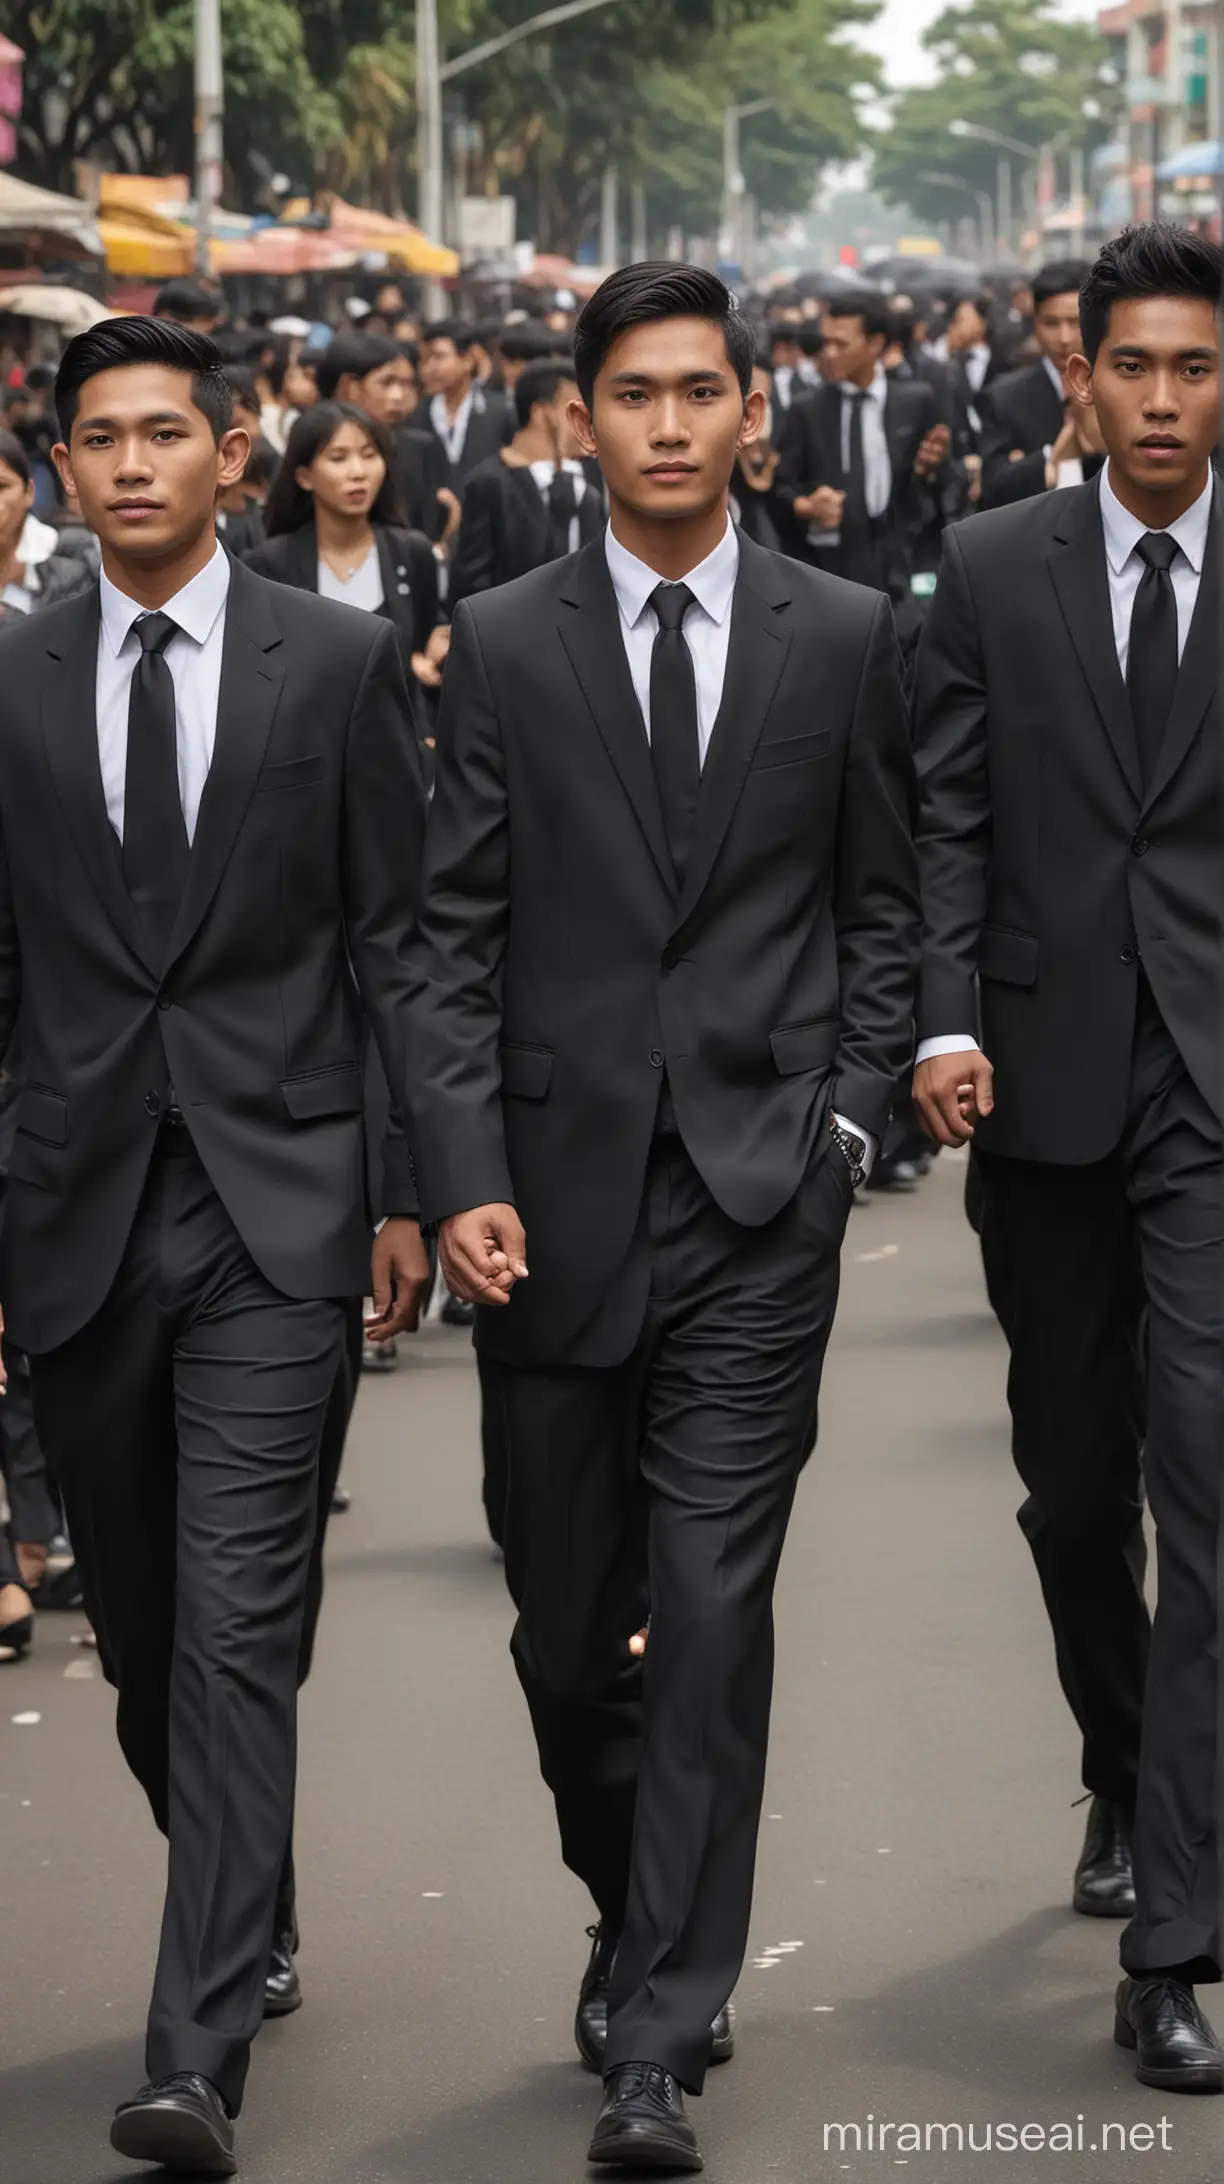 Seorang laki laki bernegara indonesia usia 25 tahun berbaju jas hitam dan 2 orang teman teman laki laki nya di belakang nya berbaju jas hitam semua sedang berjalan di kerumunan 